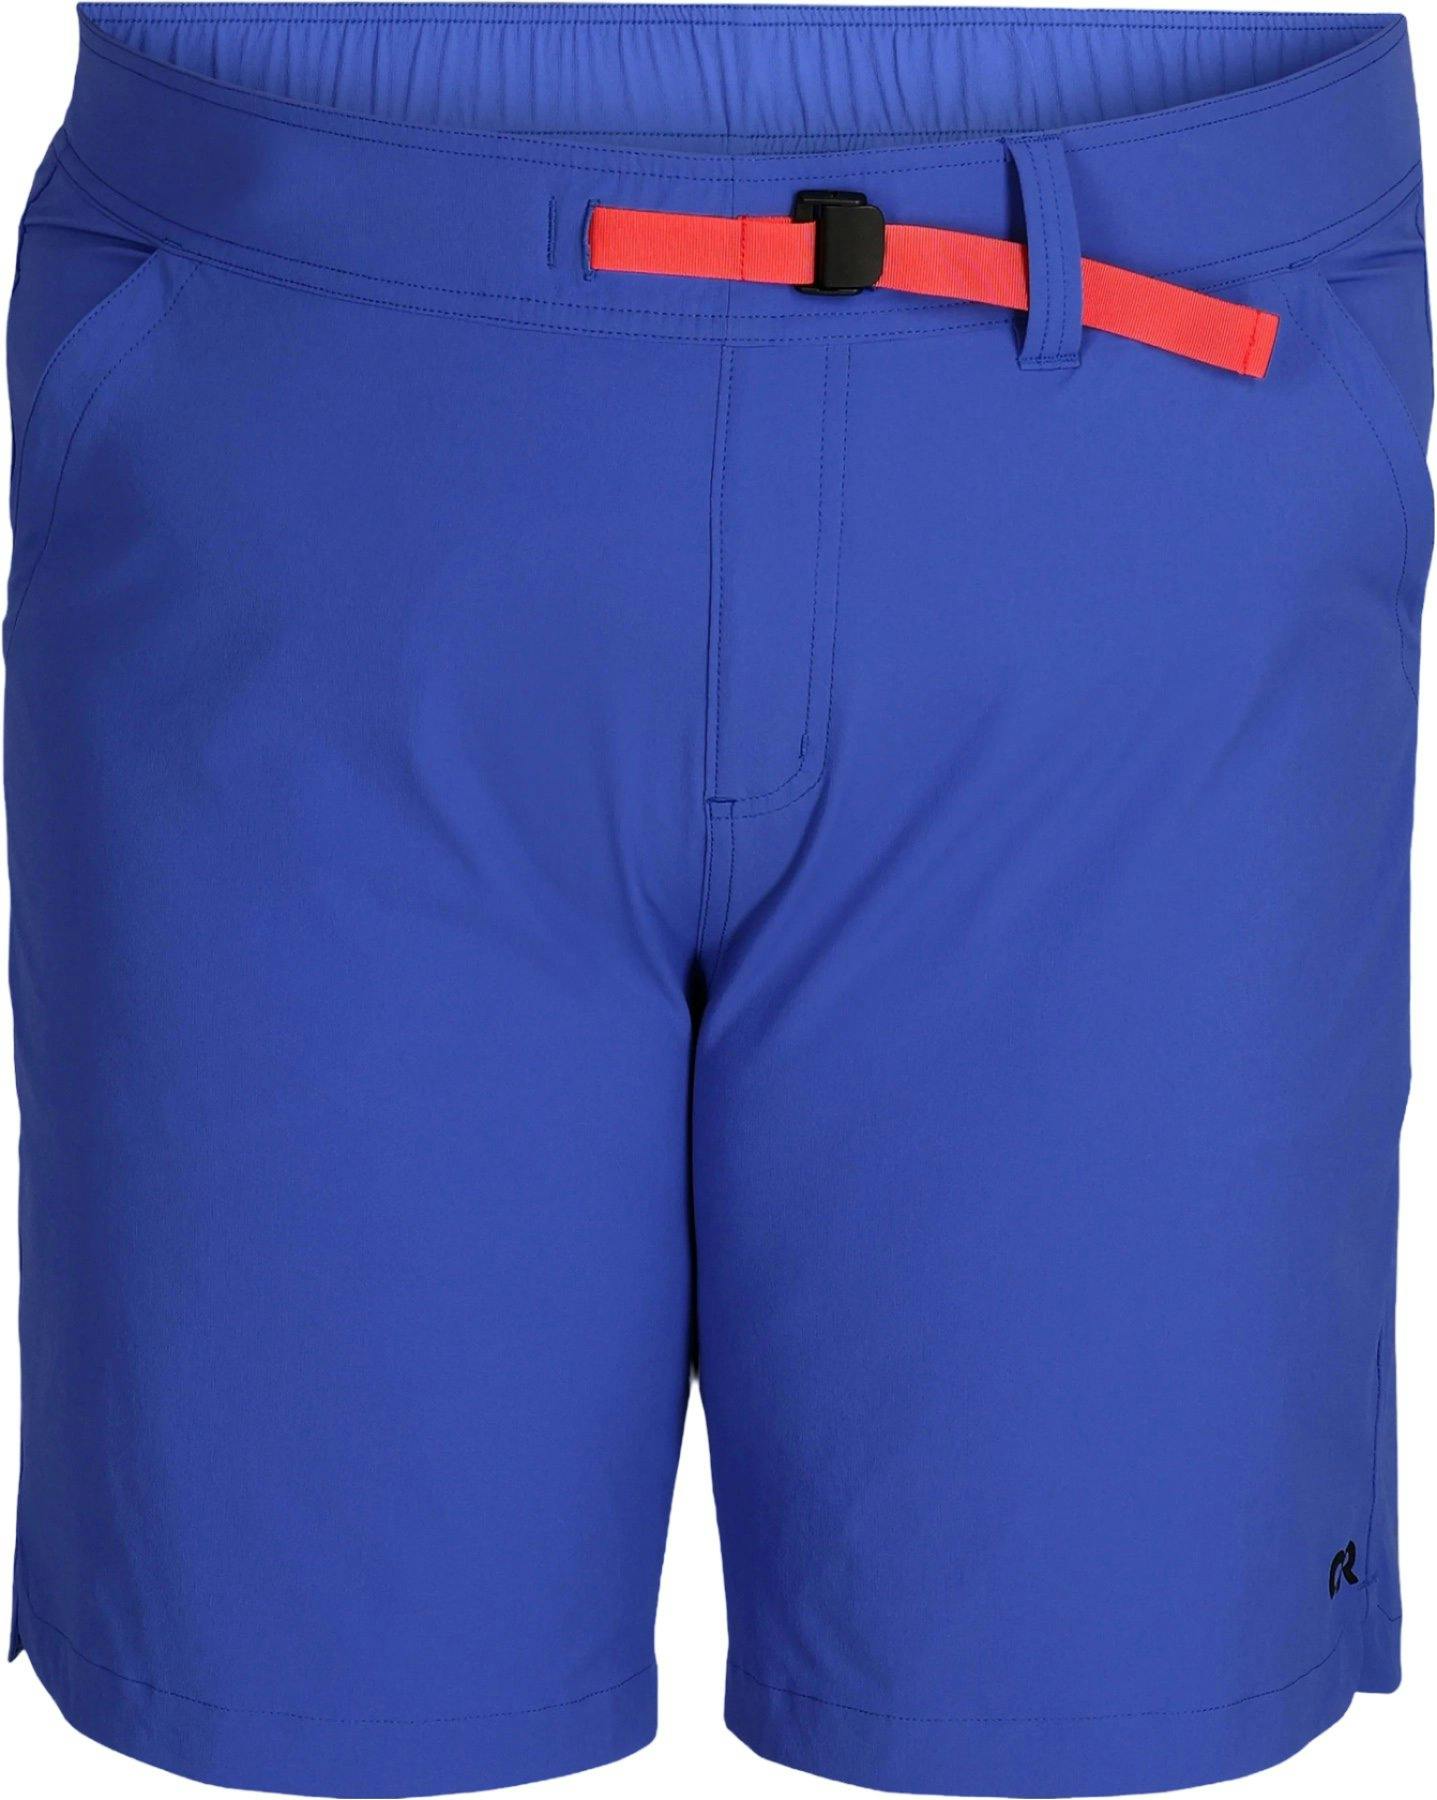 Product image for Ferrosi Shorts - Plus 9" Inseam - Women's